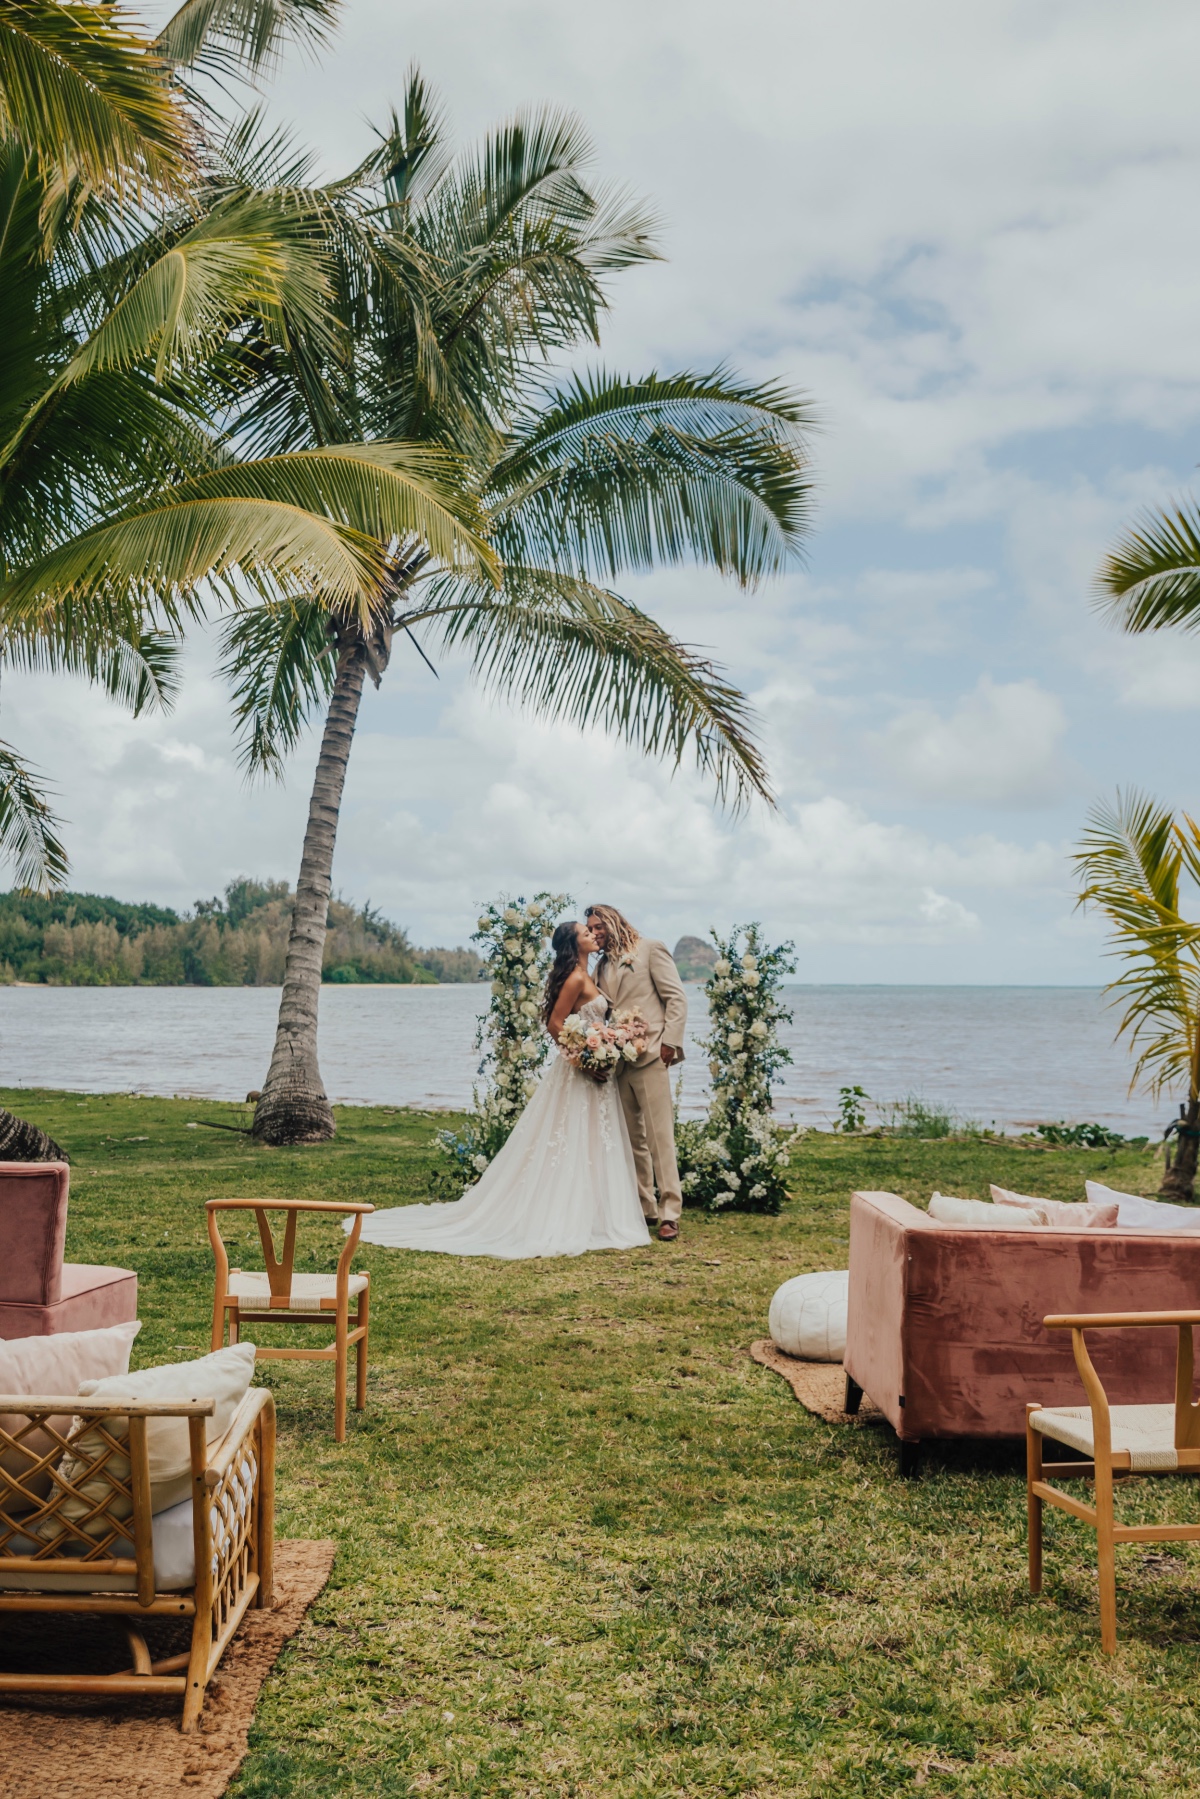 Mountains Meet the Ocean at This Inspirational Hawaii Wedding Heaven